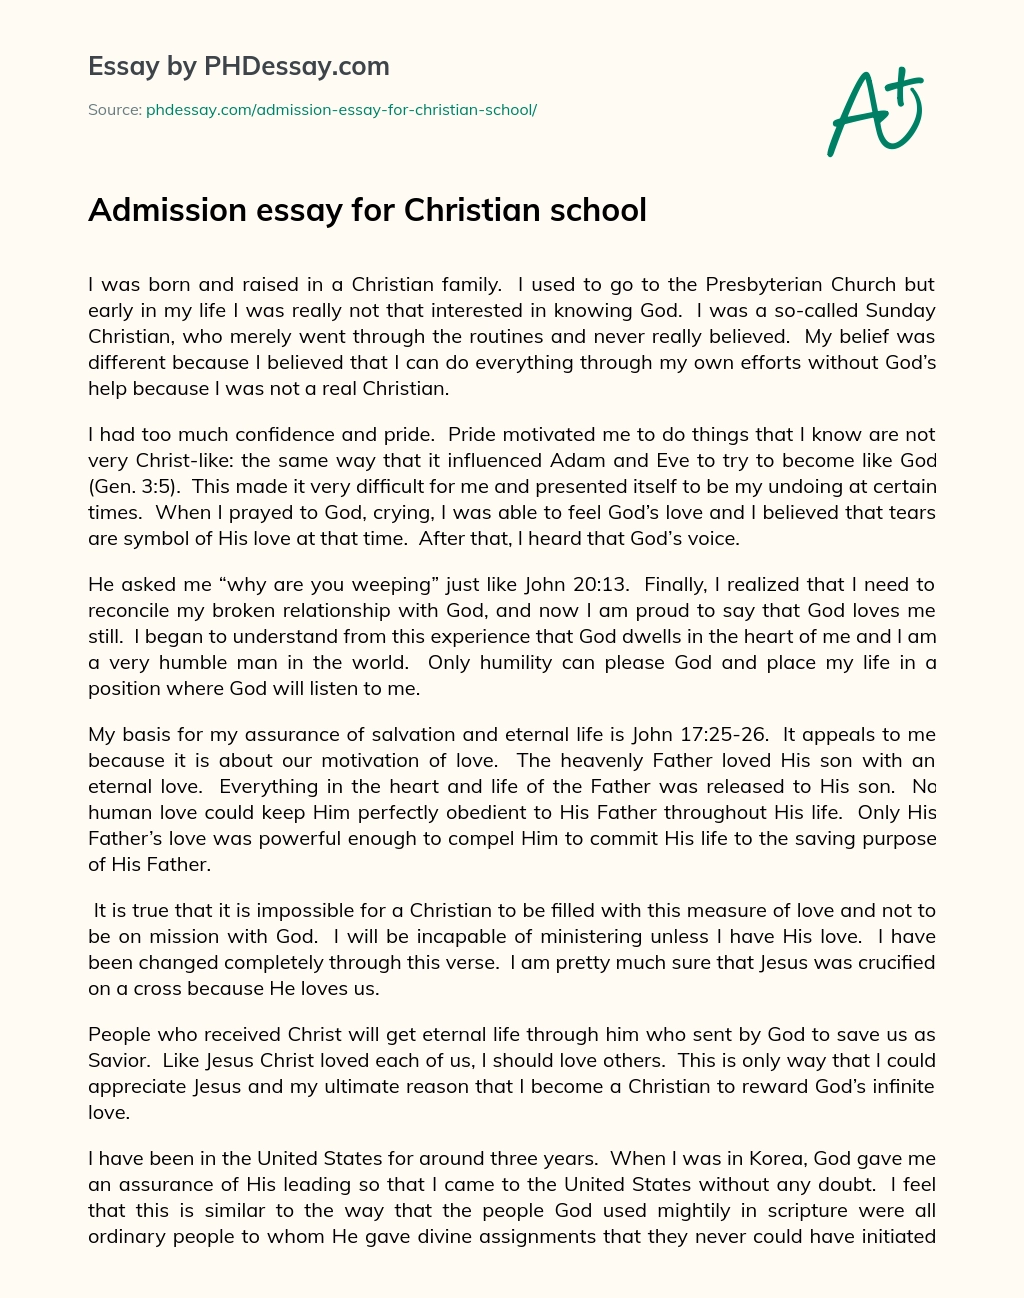 Admission essay for Christian school essay